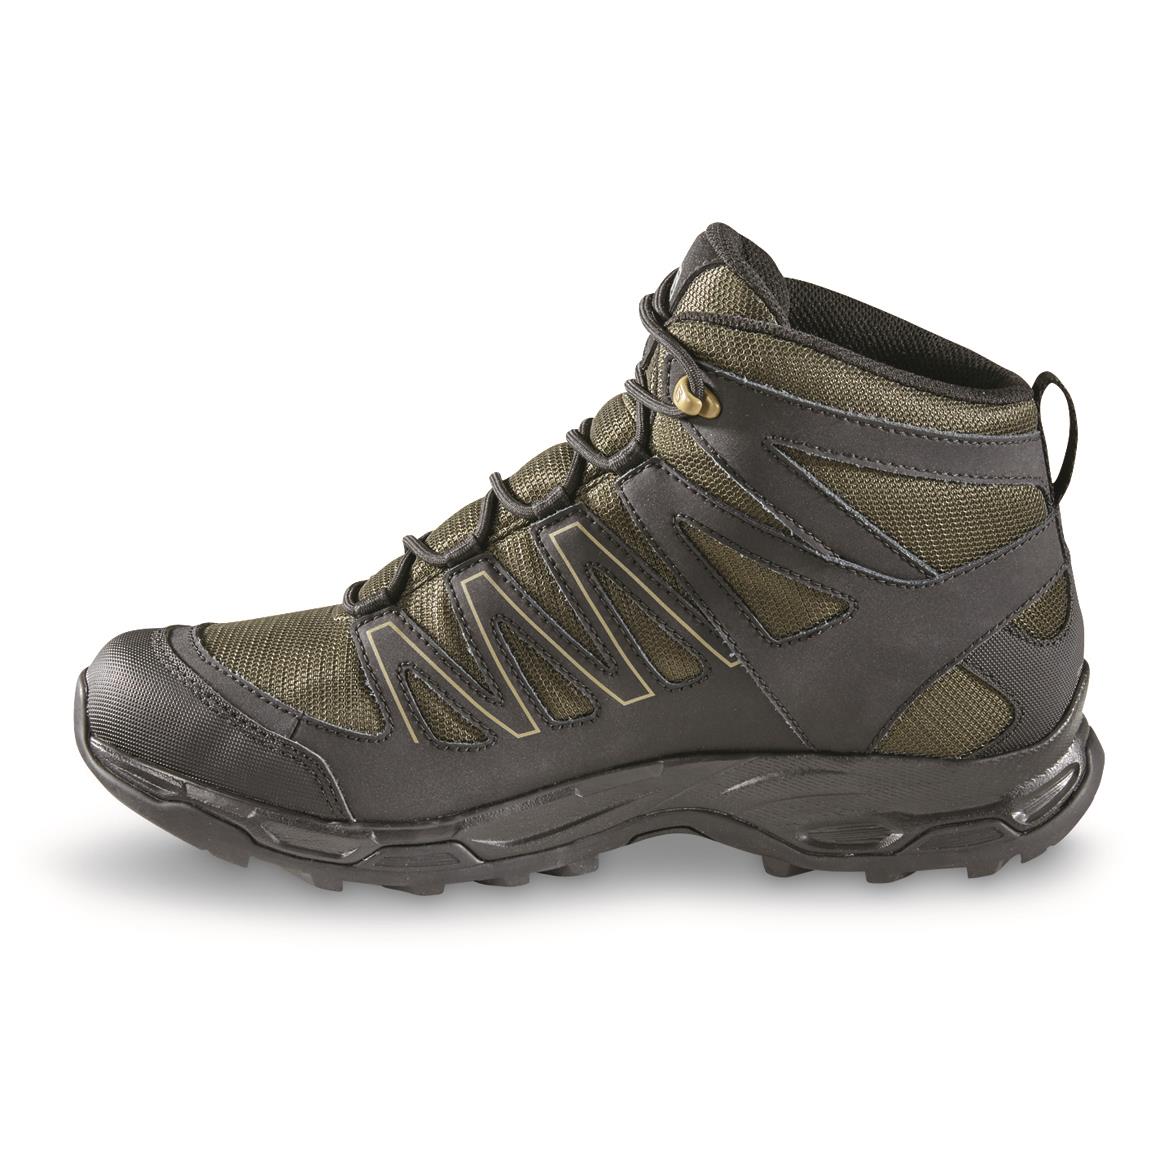 salomon men's pathfinder mid waterproof hiking boots